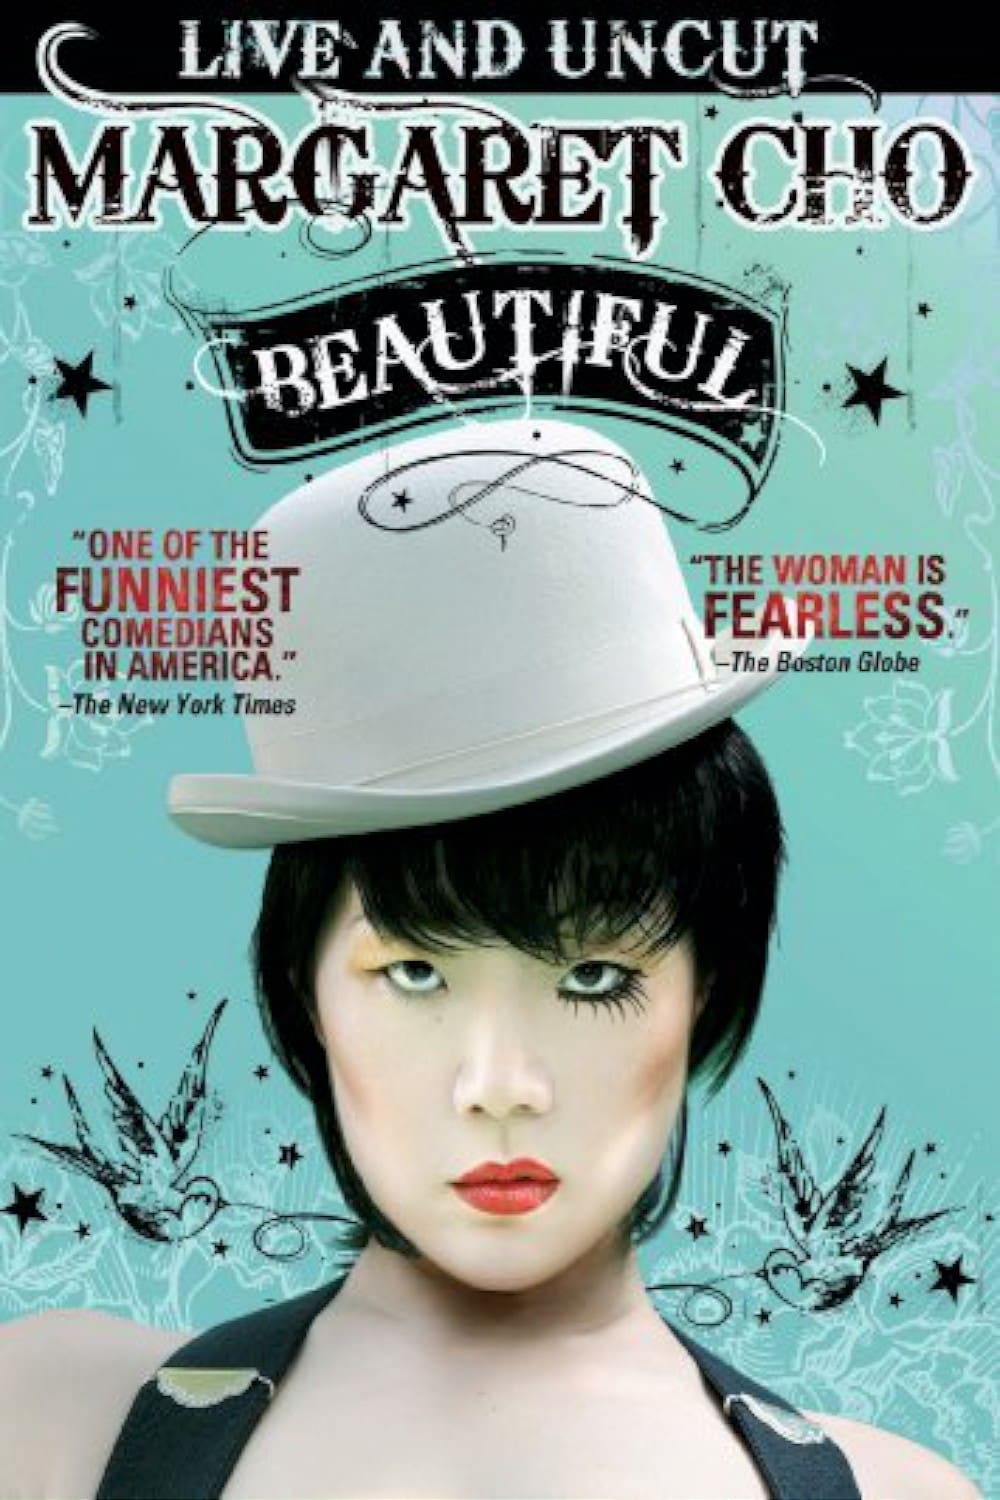 Margaret Cho: Beautiful (2009)